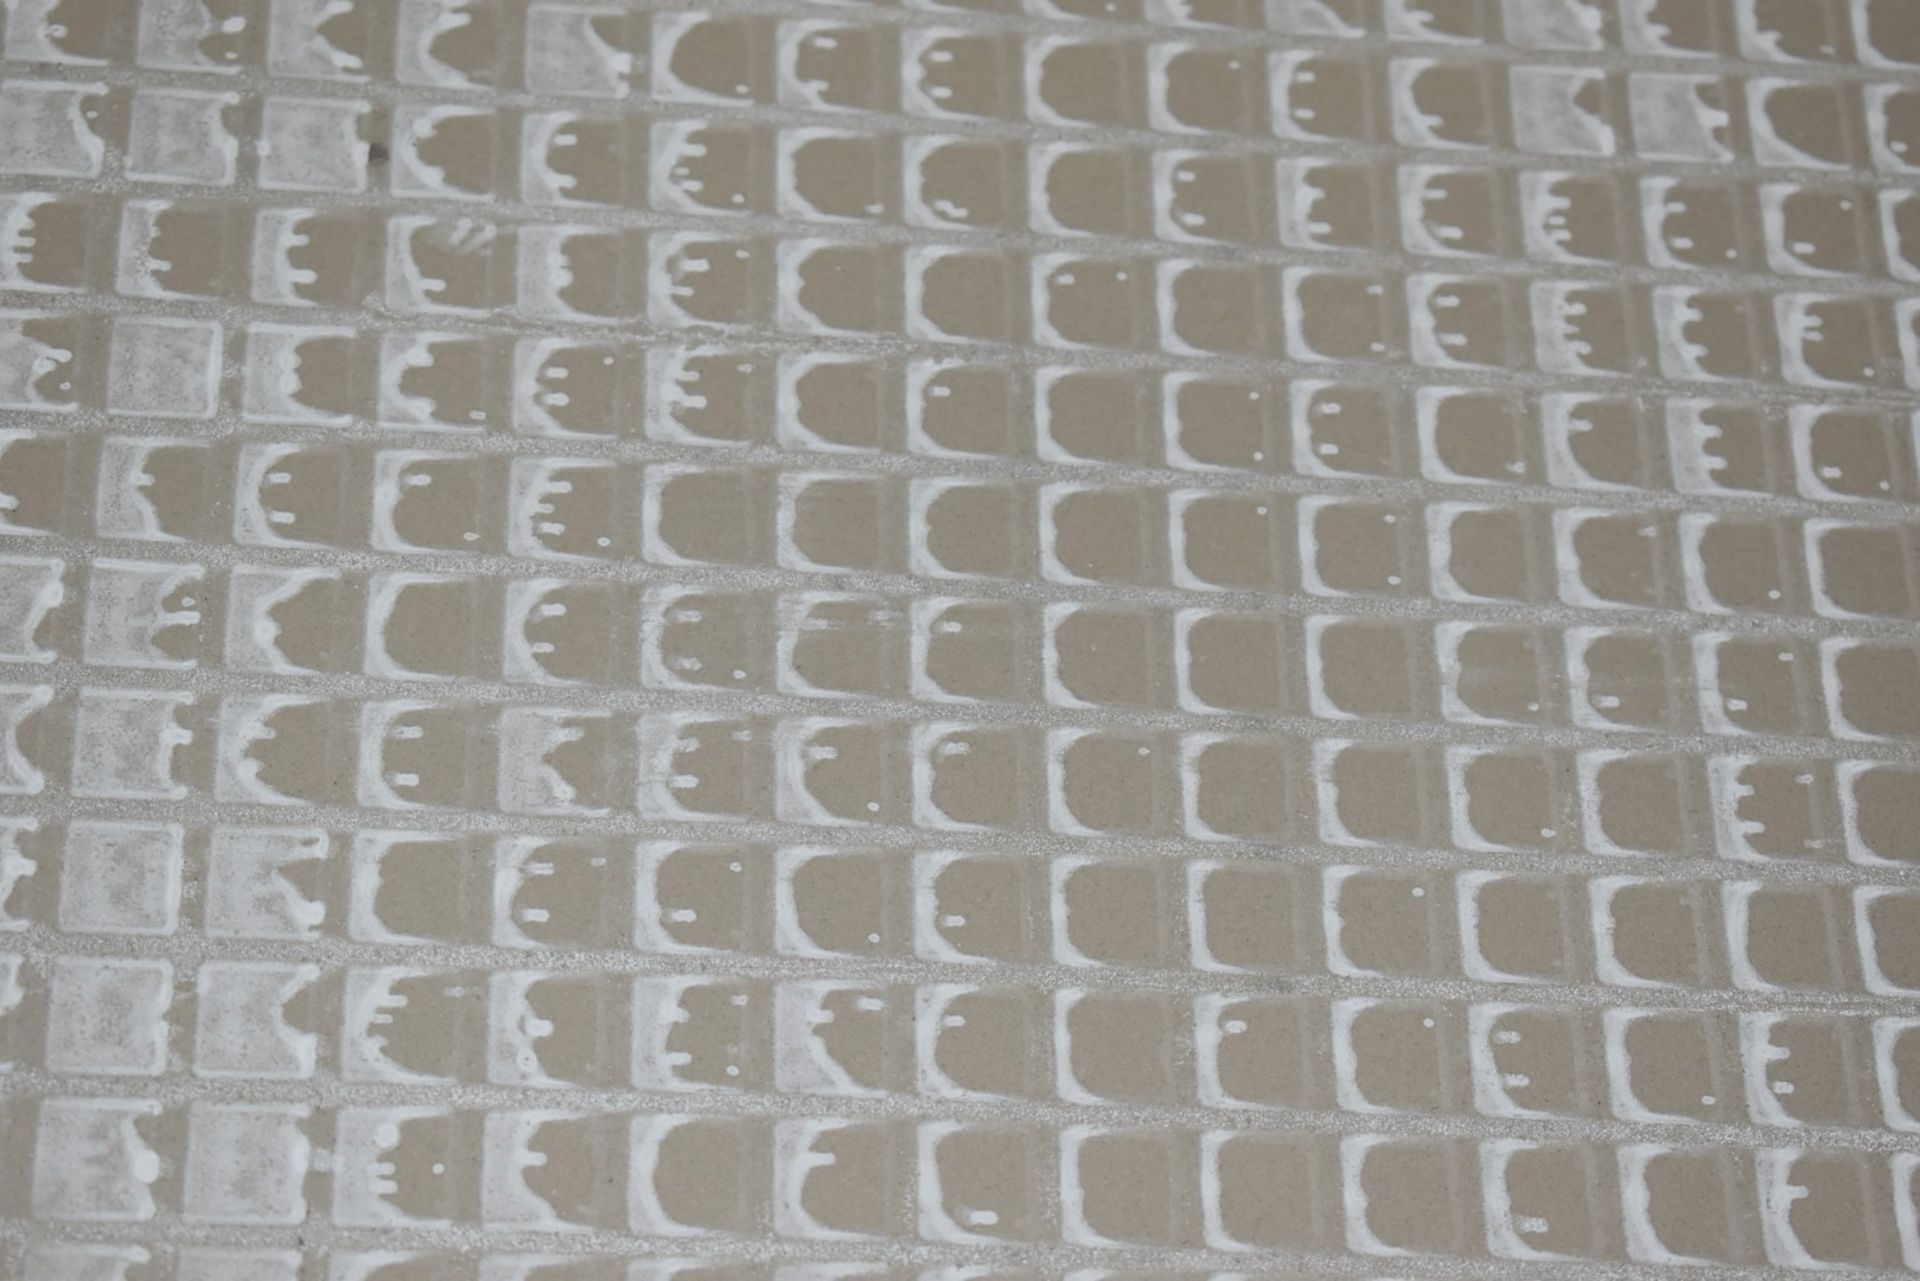 16 x Boxes of RAK Porcelain Floor or Wall Tiles - Concrete Sand Design in Beige - 30 x 60 - Image 8 of 8